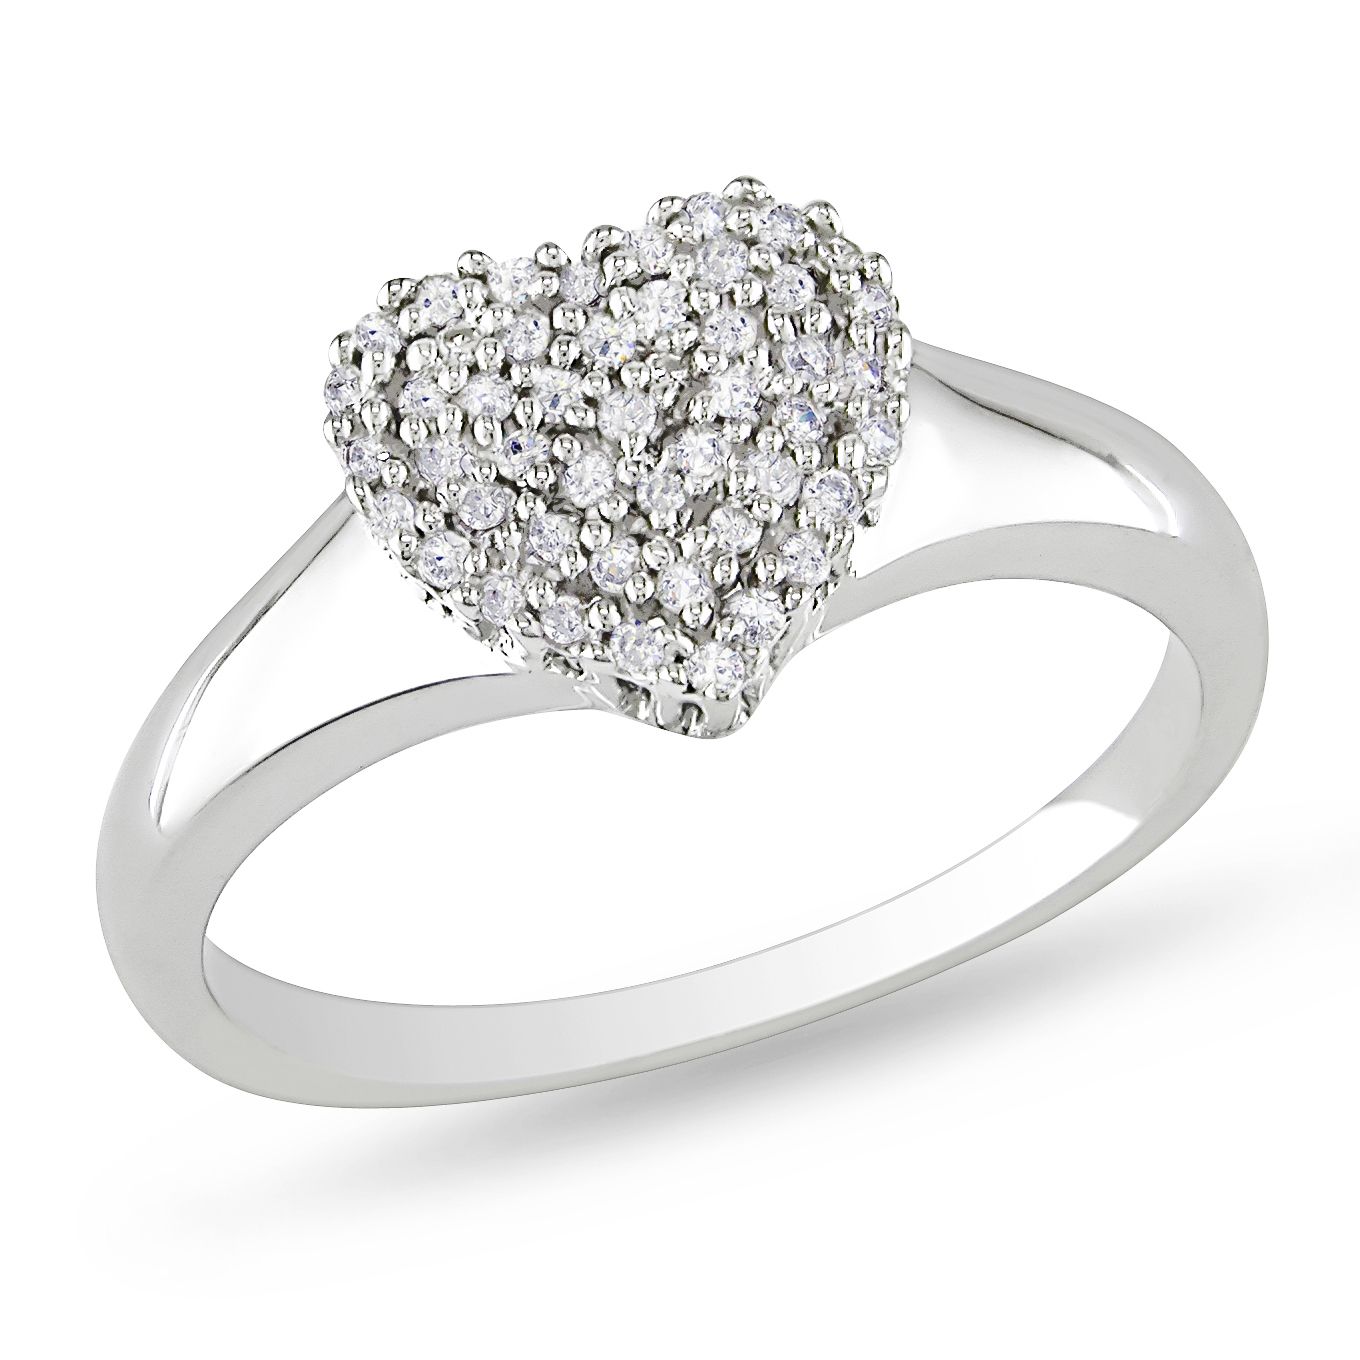 1/7 CTTW Diamond Fashion Ring Set in 10K White Gold (GH I2;I3)